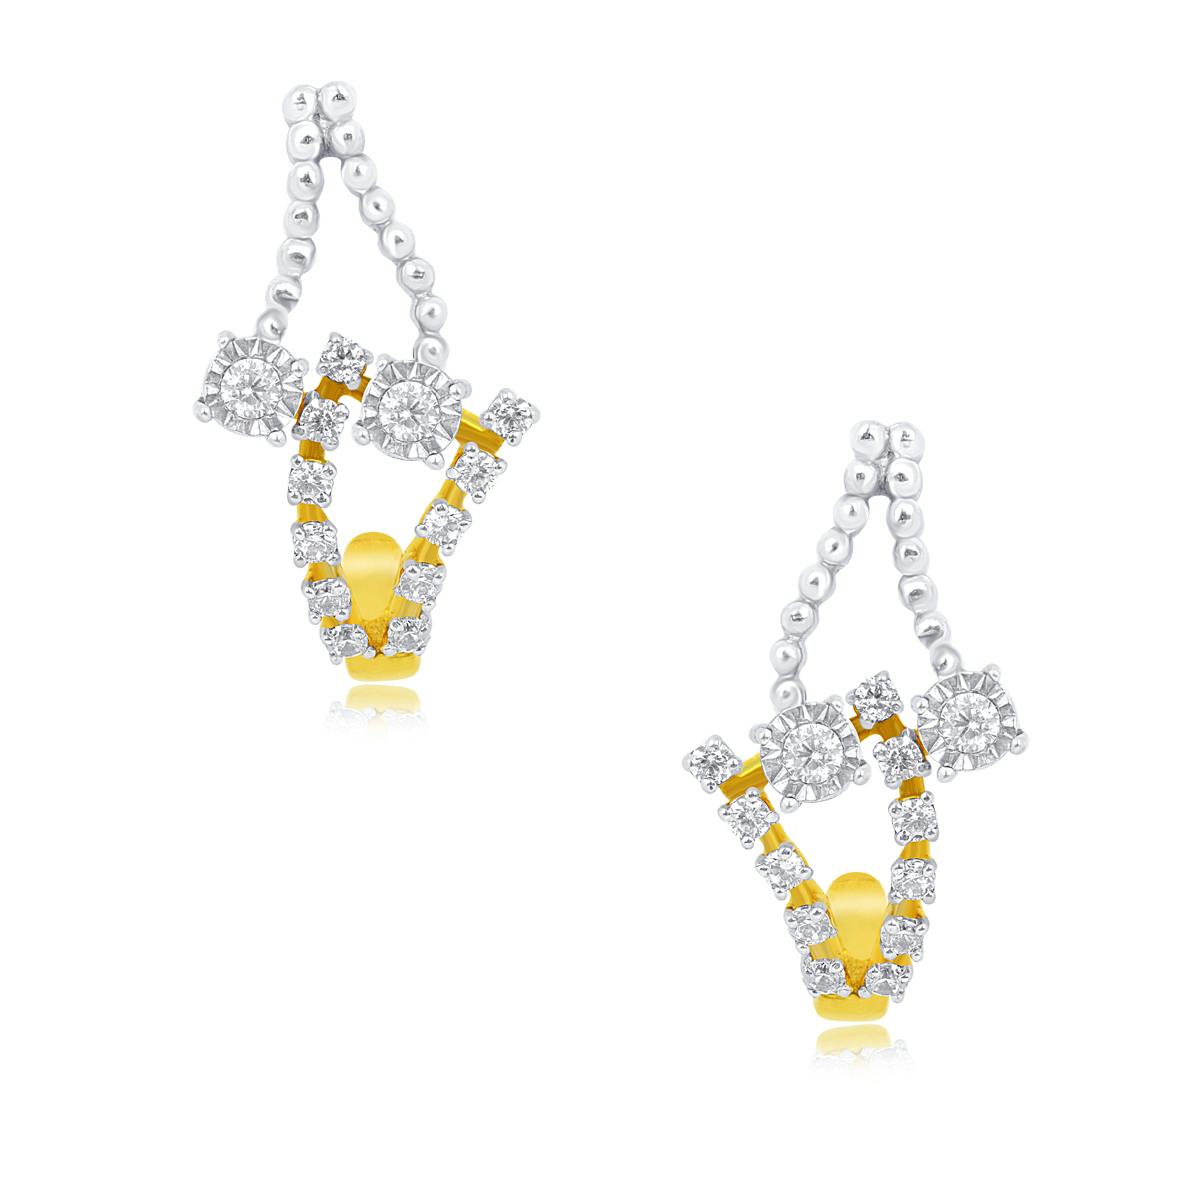 Reign diamond earrings